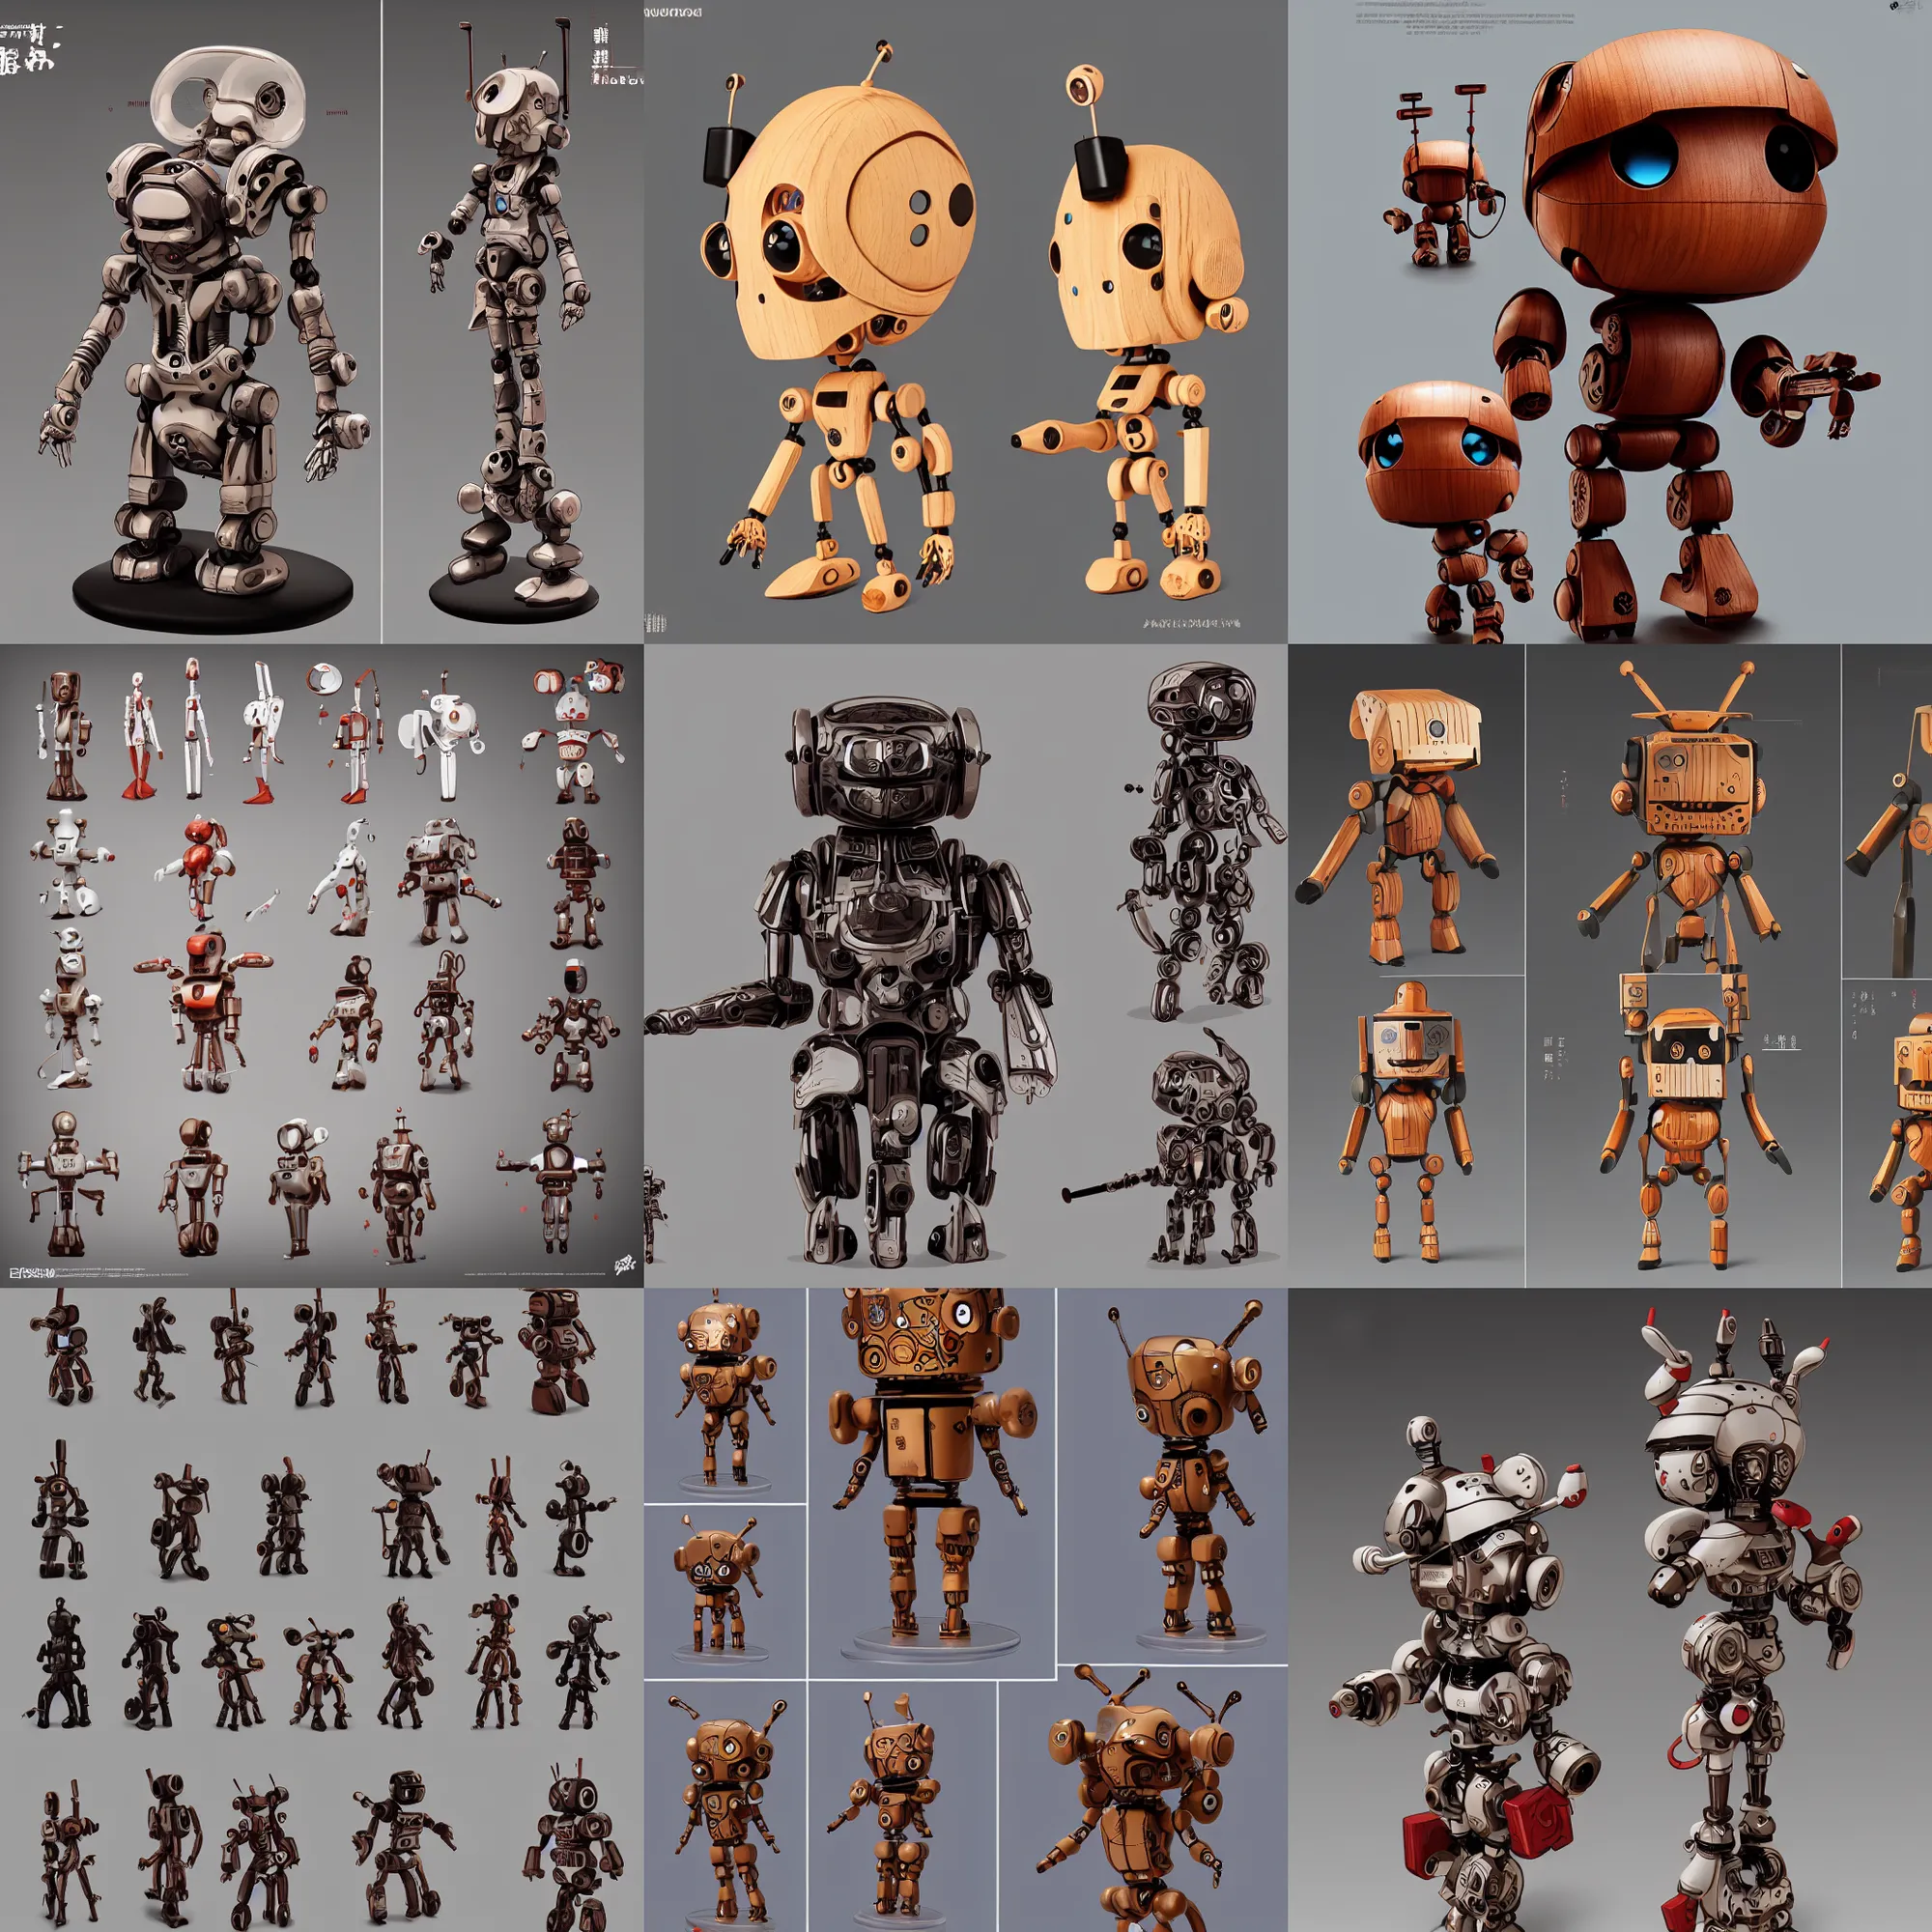 Prompt: illustration artoys cute figurine wooden robots samourai, cyberpunk, highly detailed, symetrical, geometrical, cgsociety, artstation